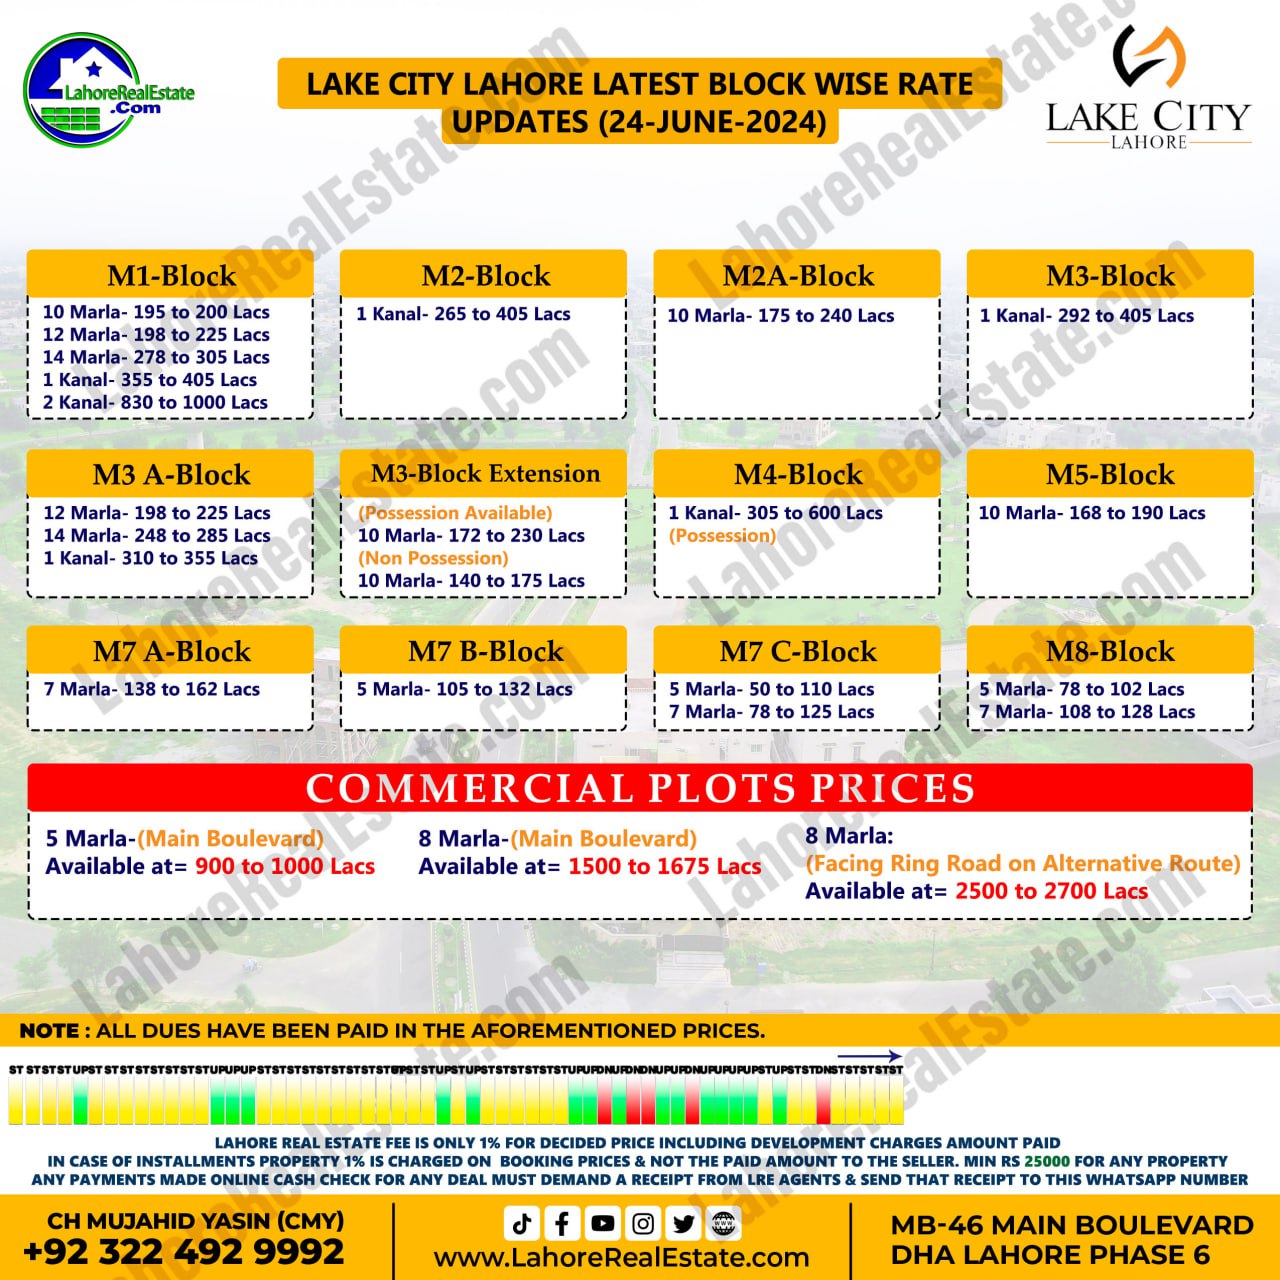 Lake City Lahore Plot Prices Blockwise Rates June 24, 2024